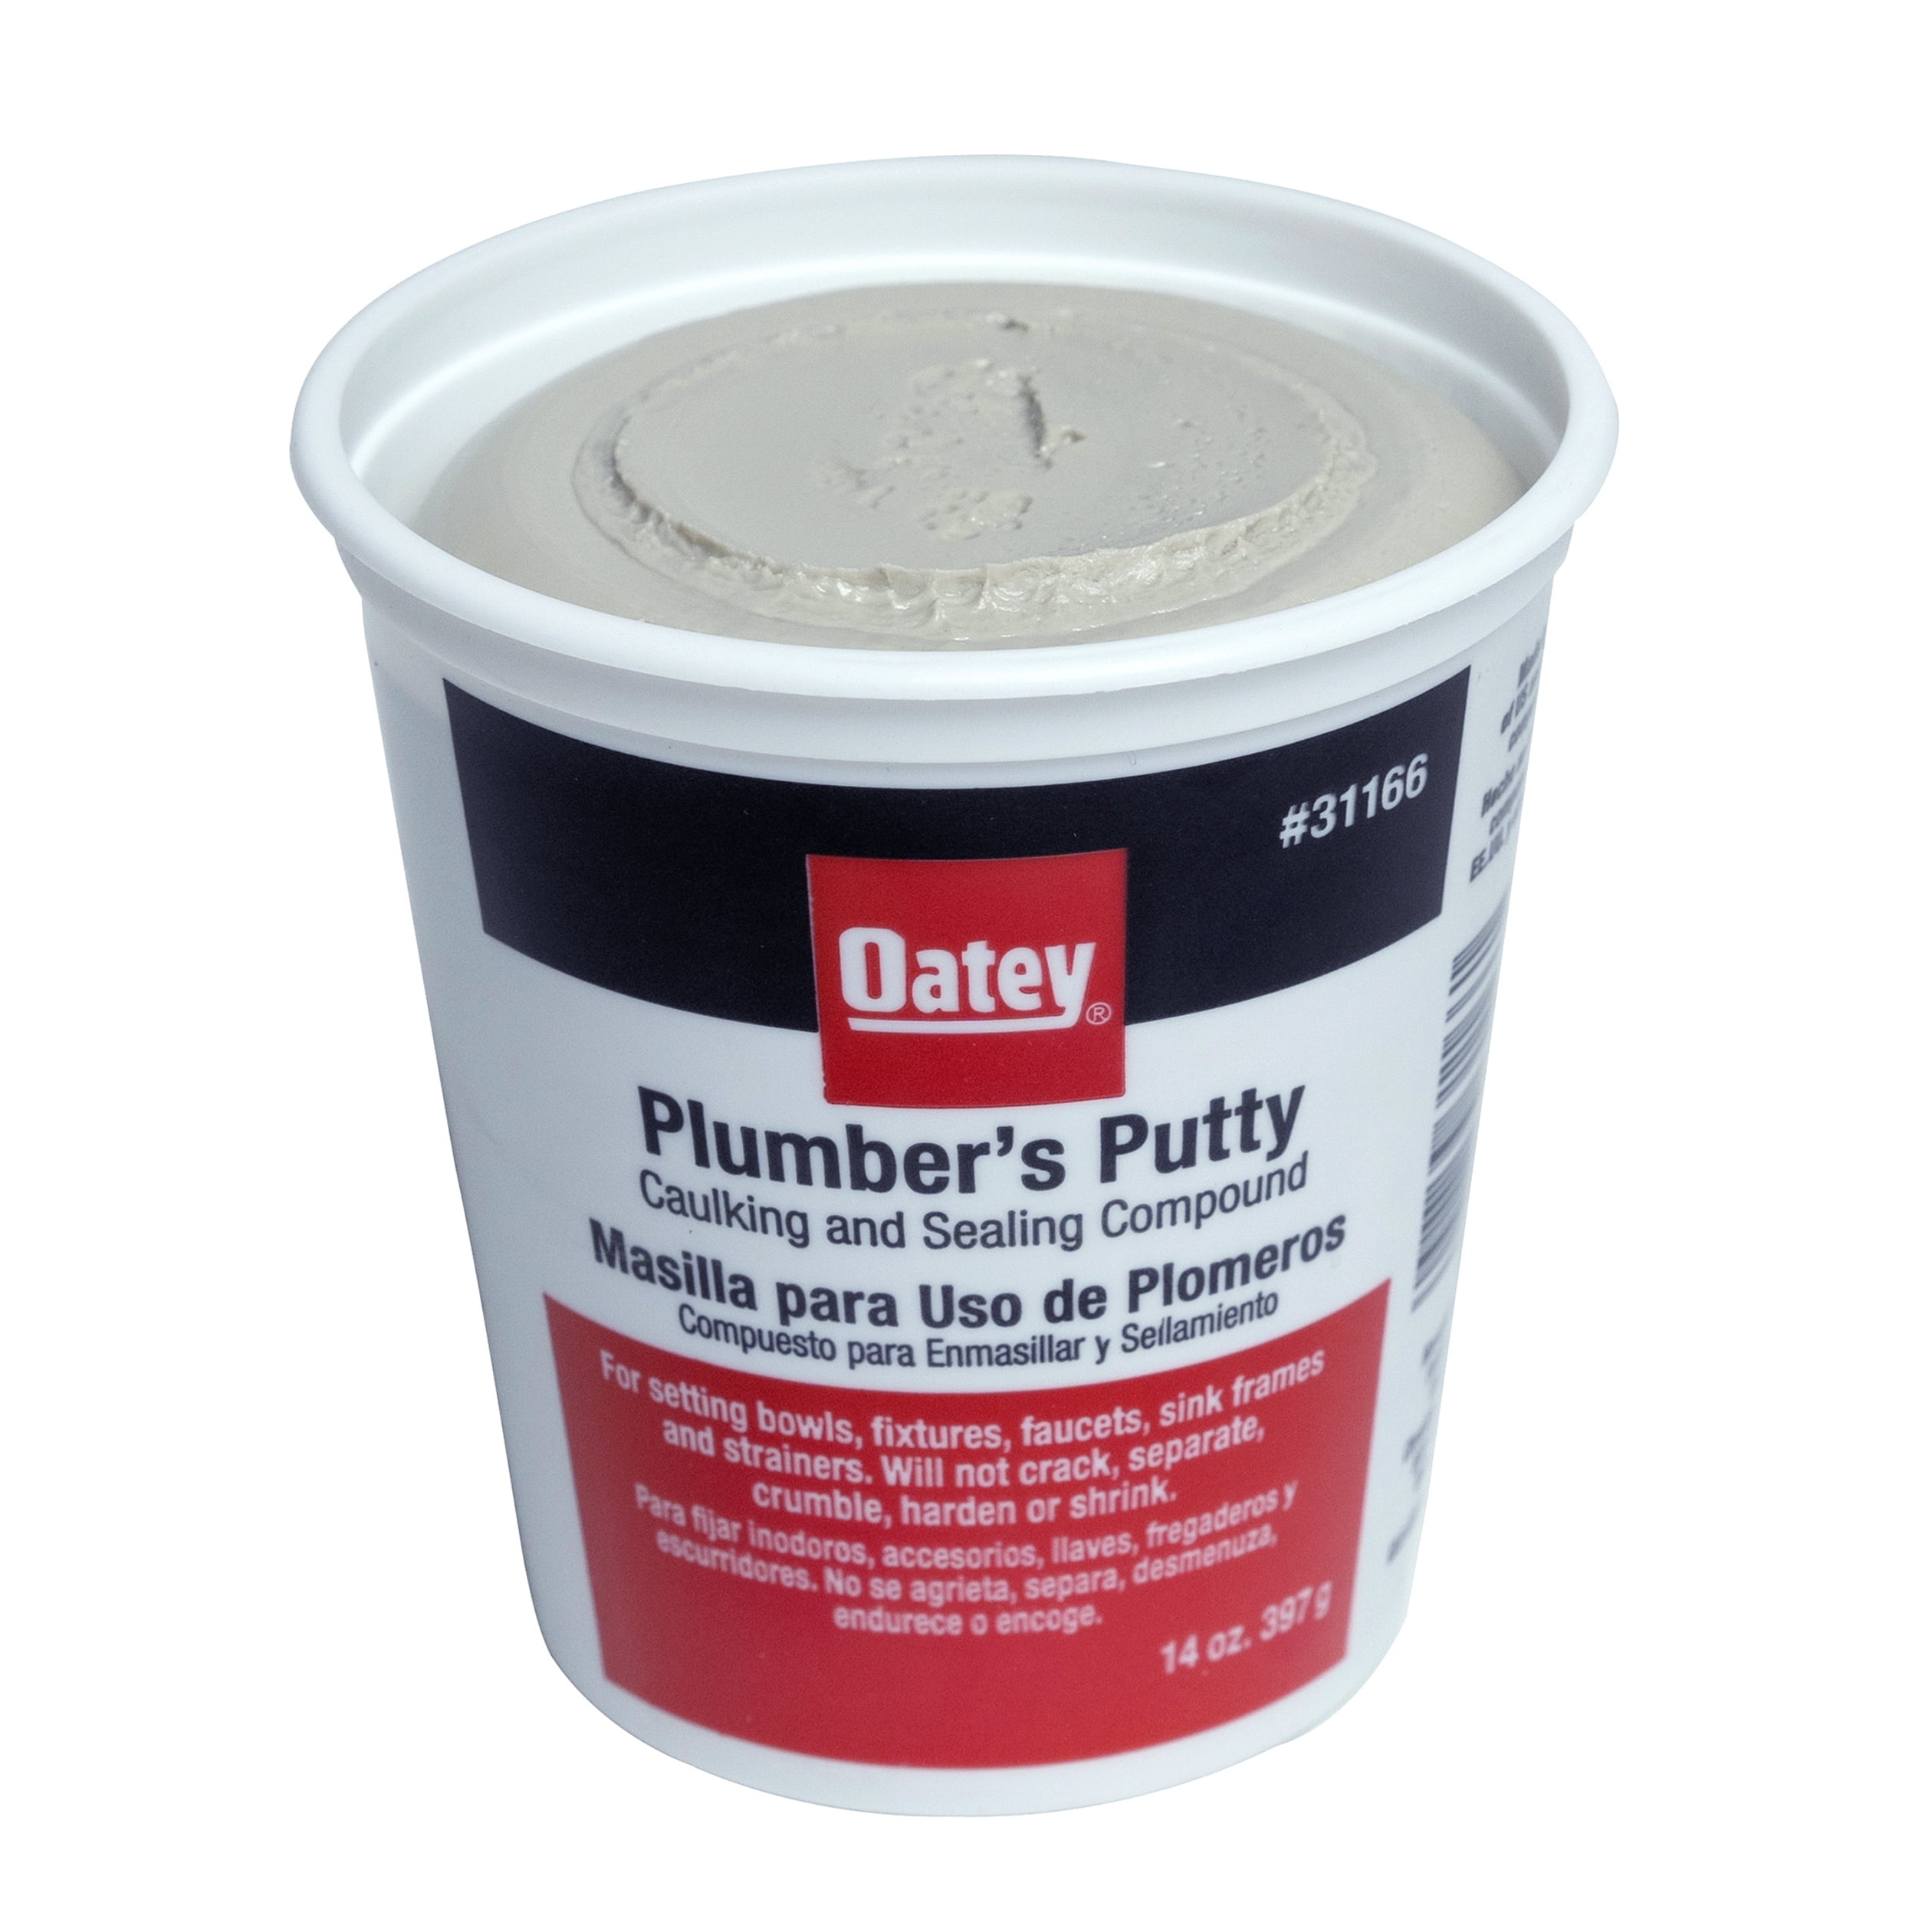 Oatey 14 oz. Plumber's Putty Caulking and Sealing Compound